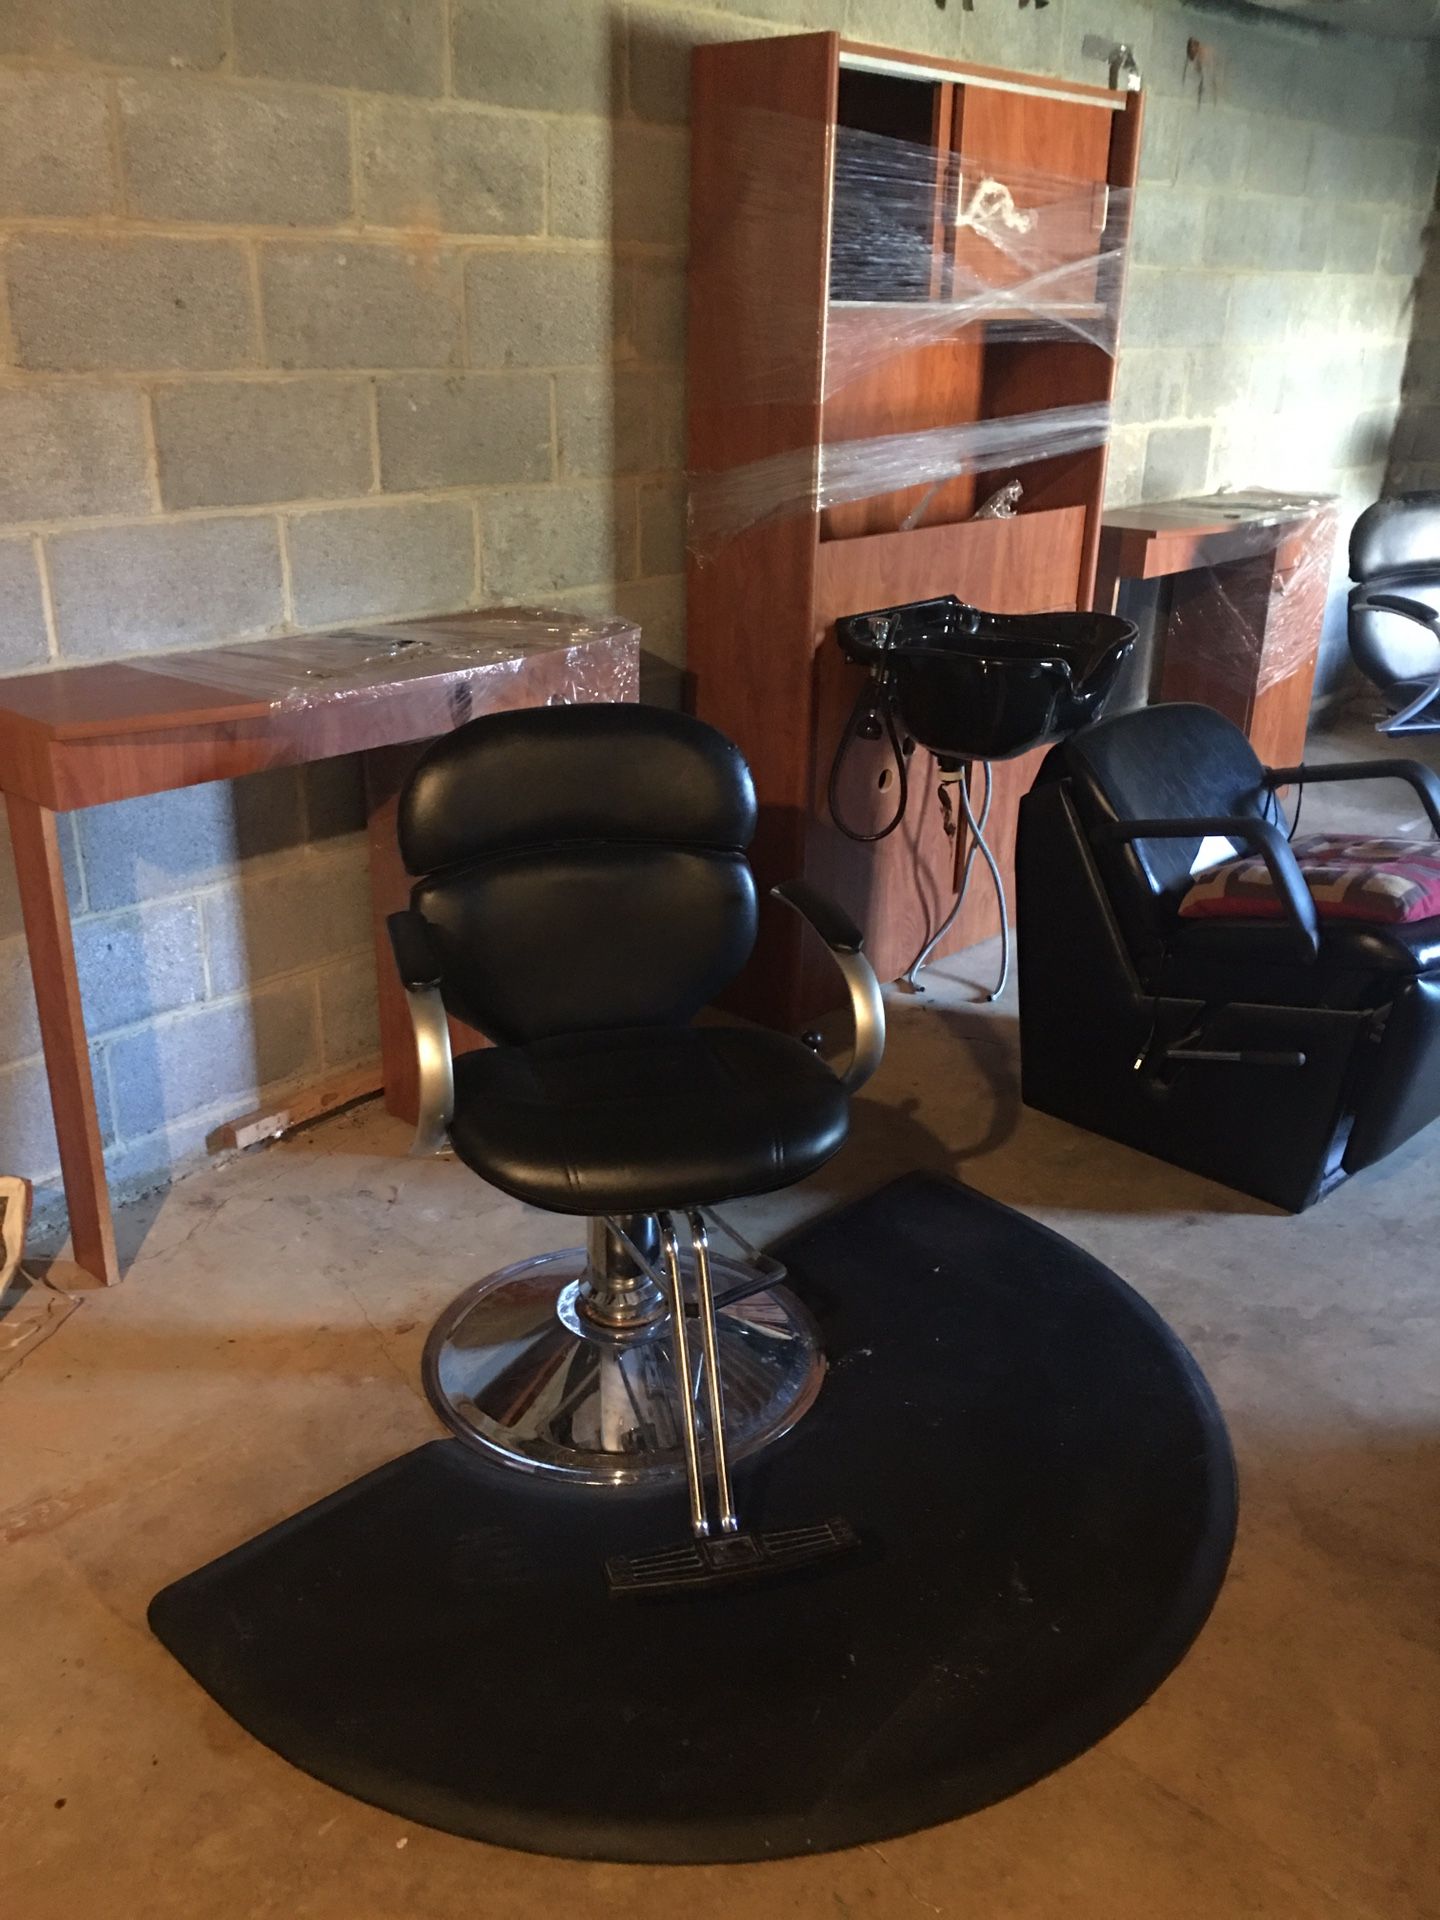 Salon equipment chairs and station w/ shampoo station